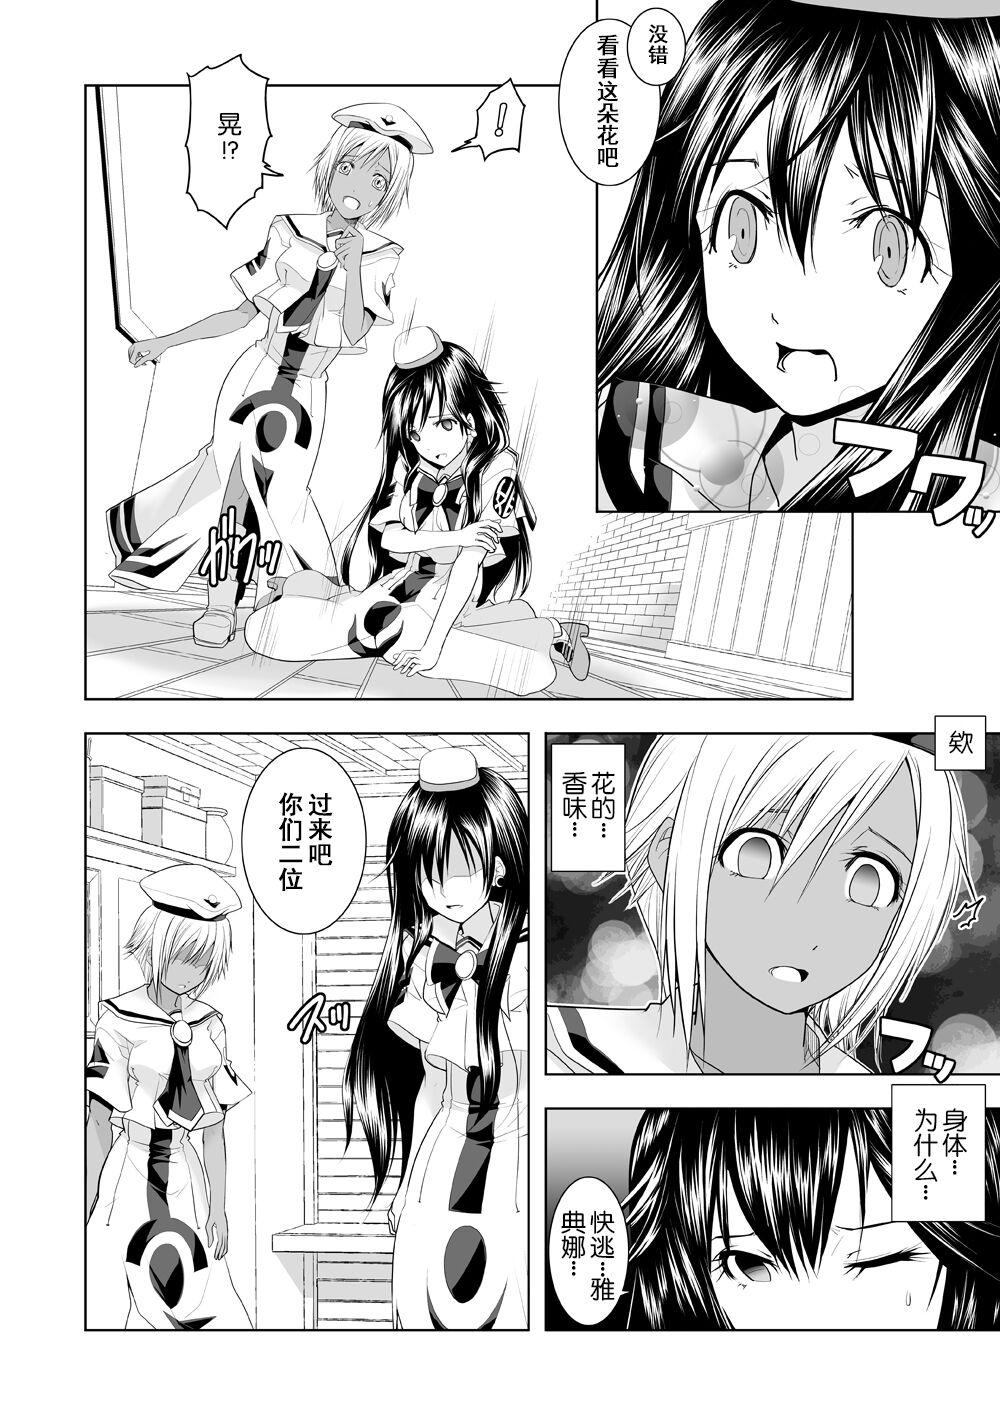 Weird AR*A Mind-control Manga - Aria Amigos - Page 8